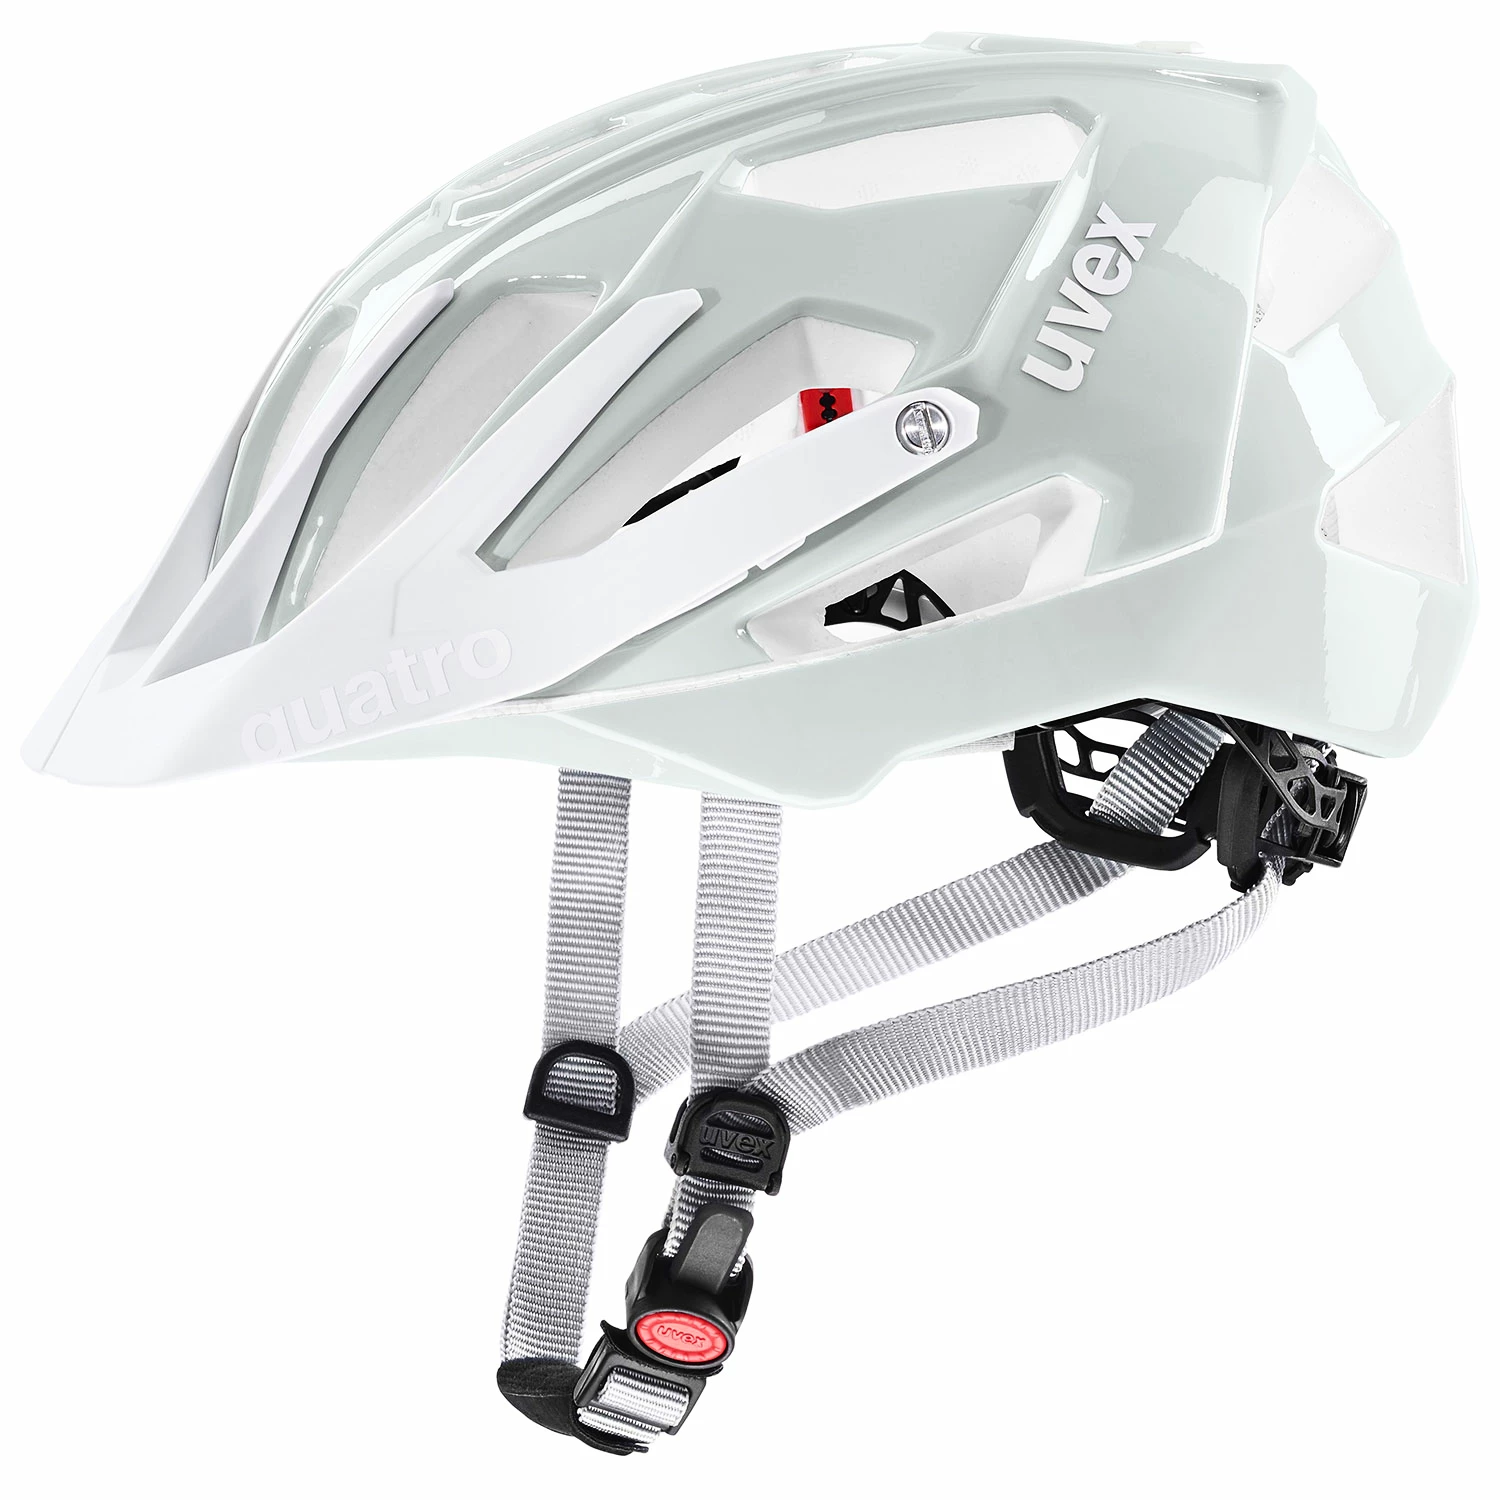 Uvex Quatro L bicycle helmet